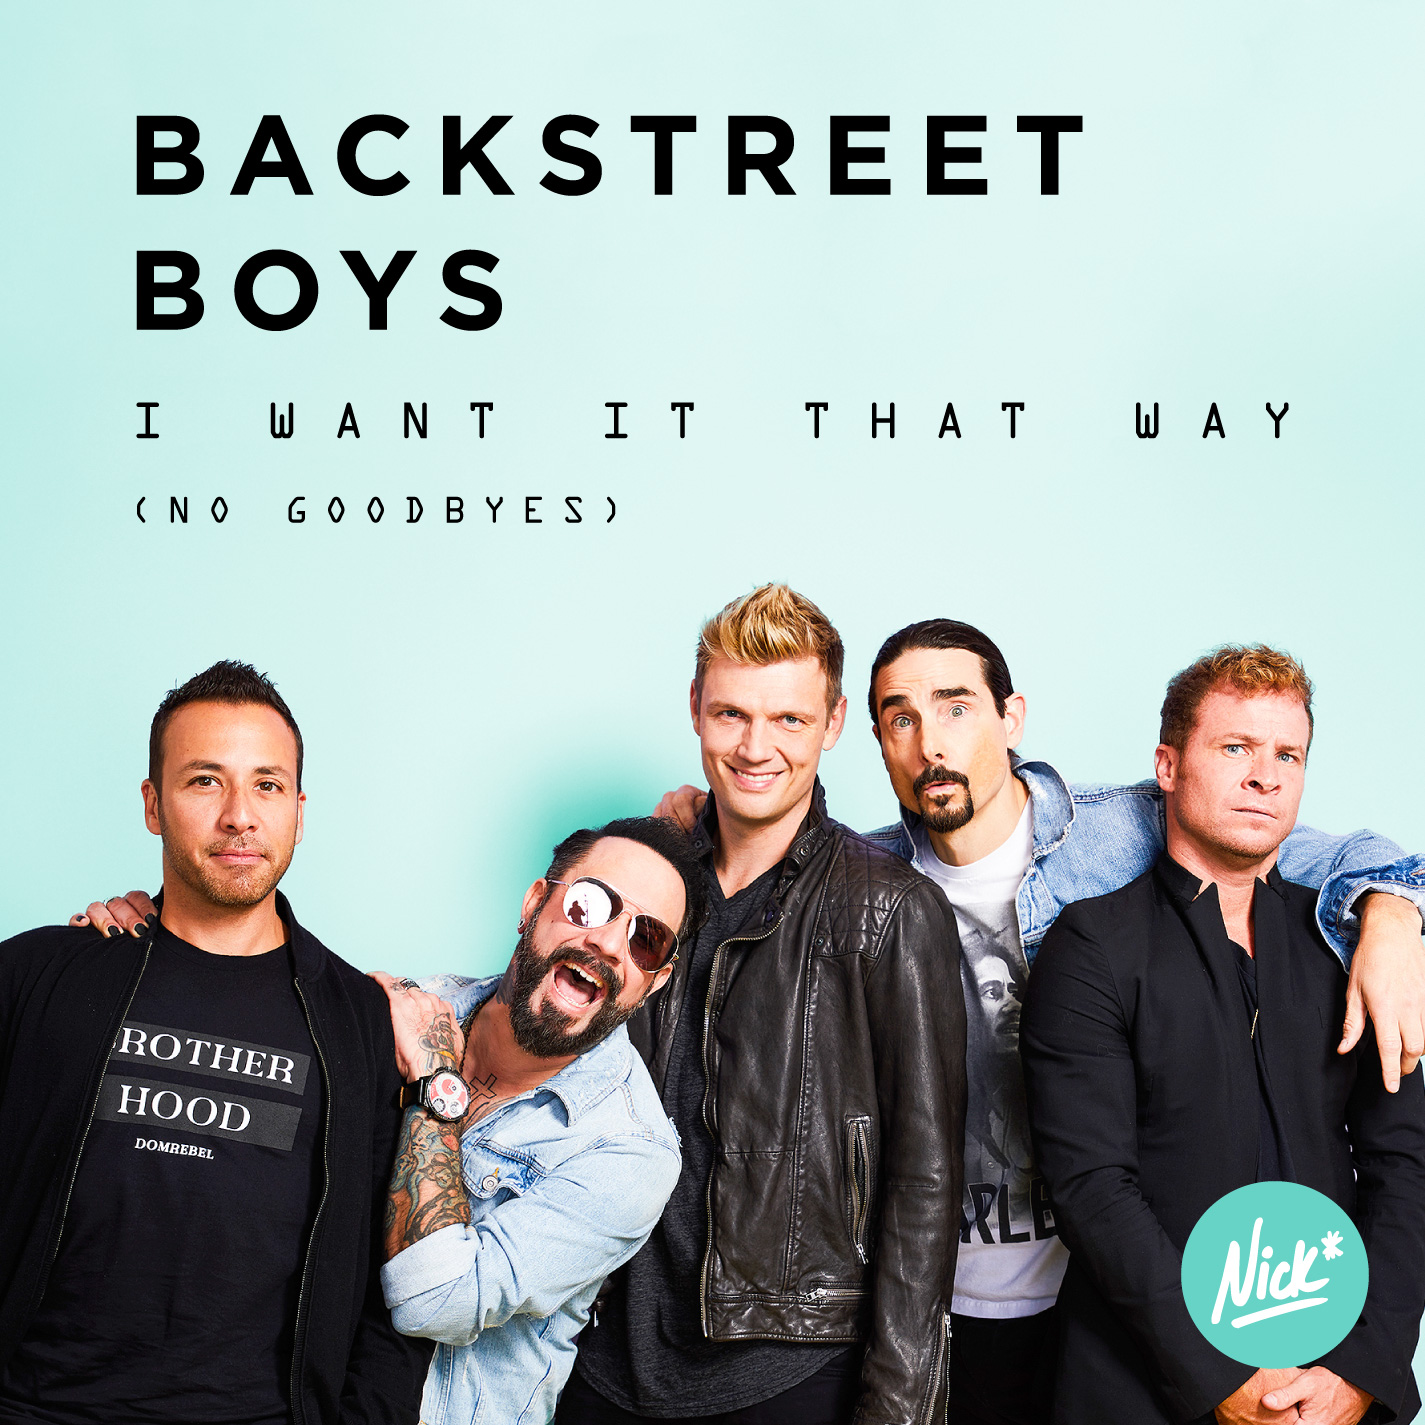 Backstreet Boys - I Want It That Way (No Goodbyes) Nick* Original Mix